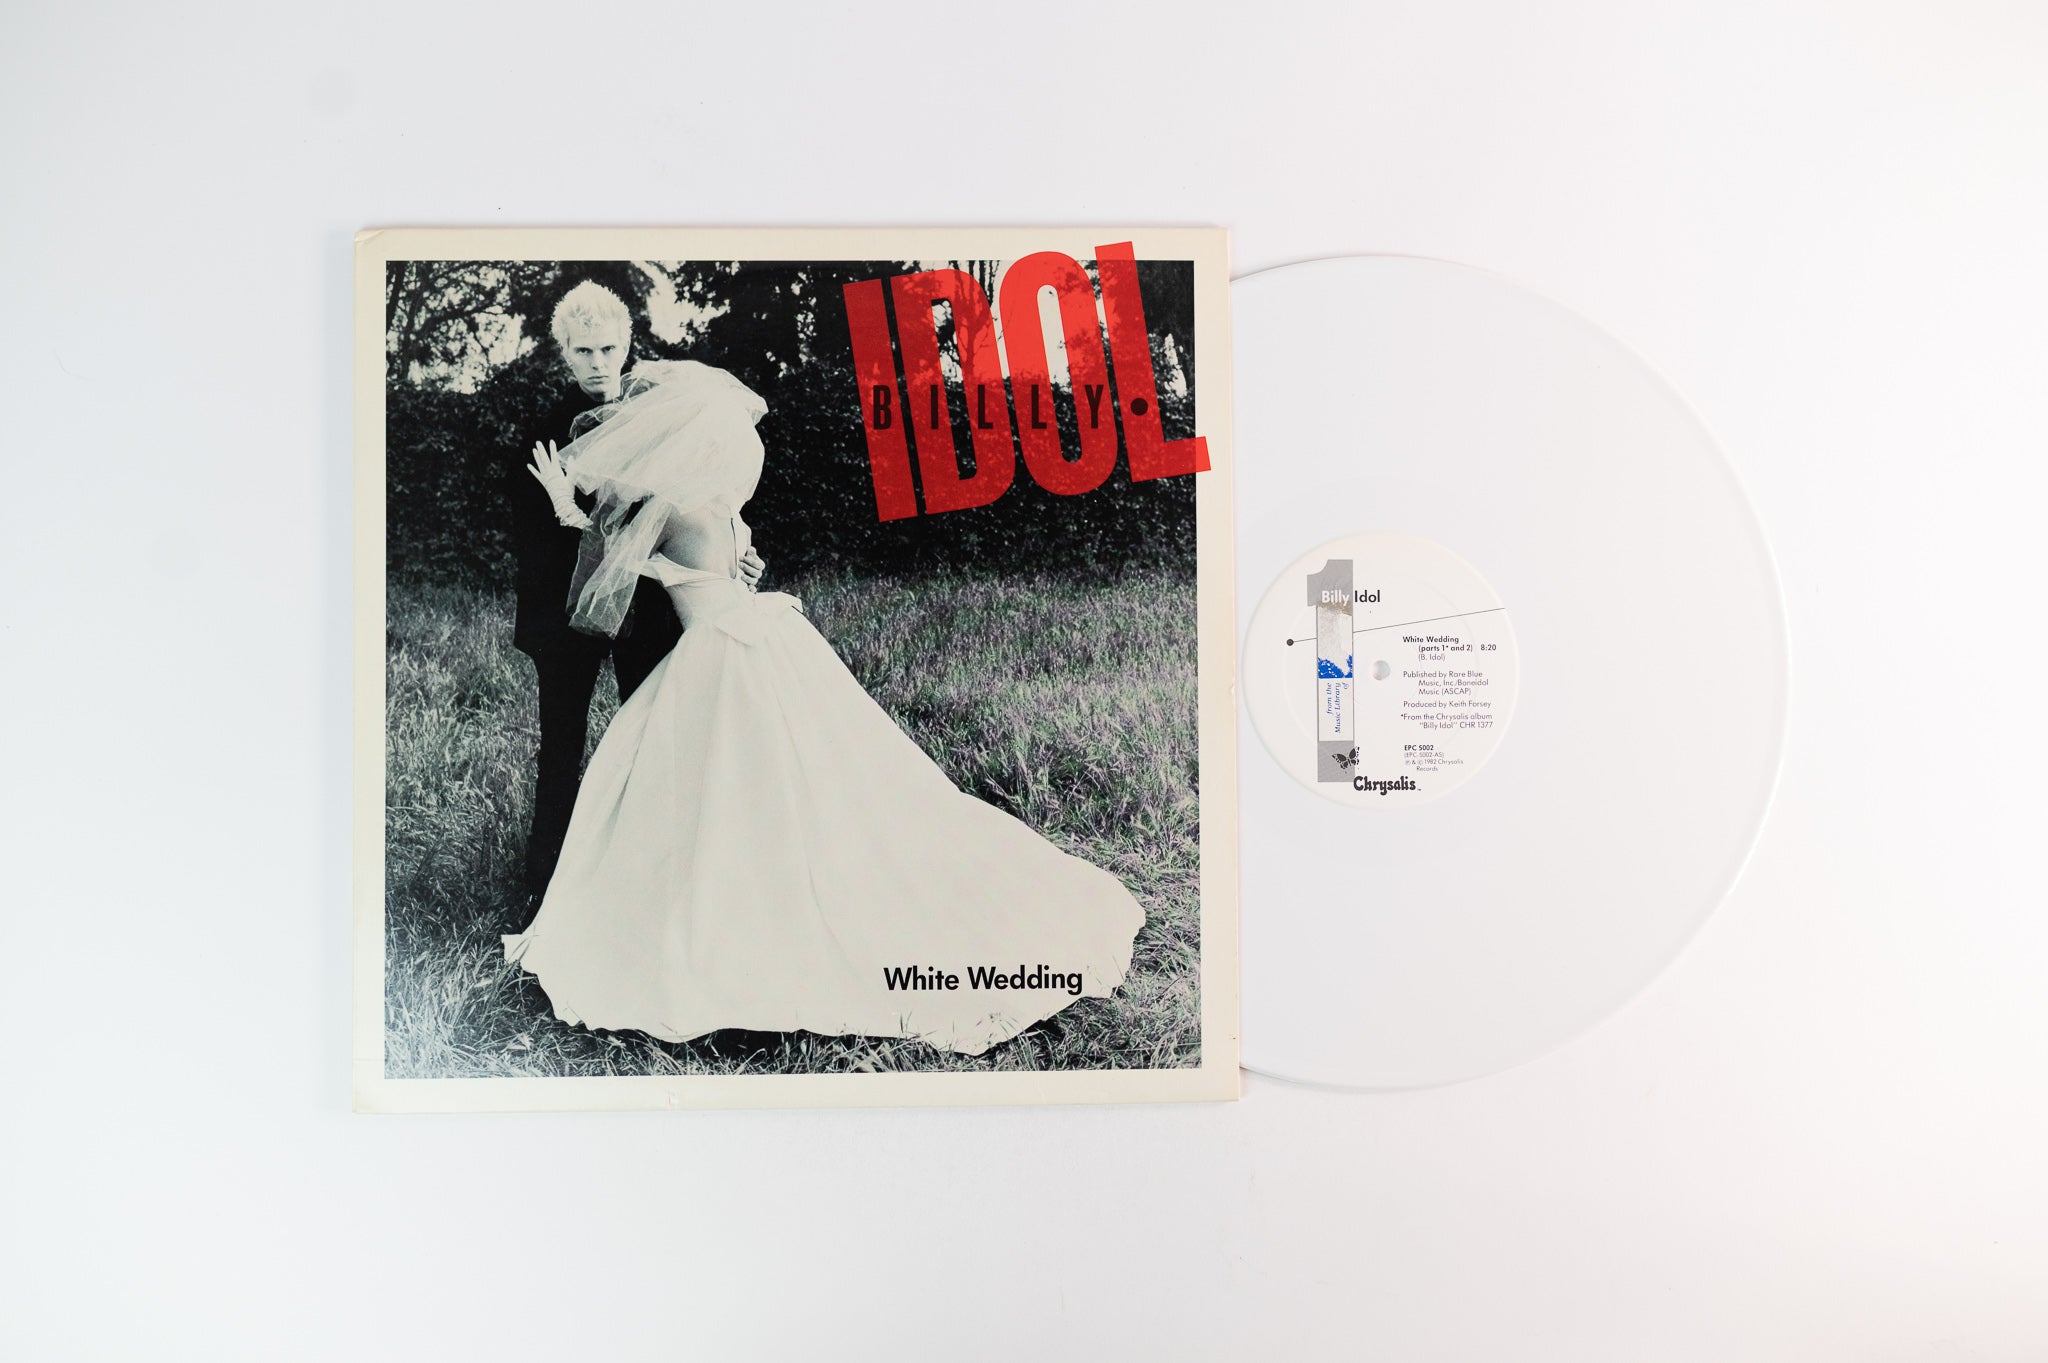 Billy Idol - White Wedding on Chrysalis Limited White Vinyl 12" Single